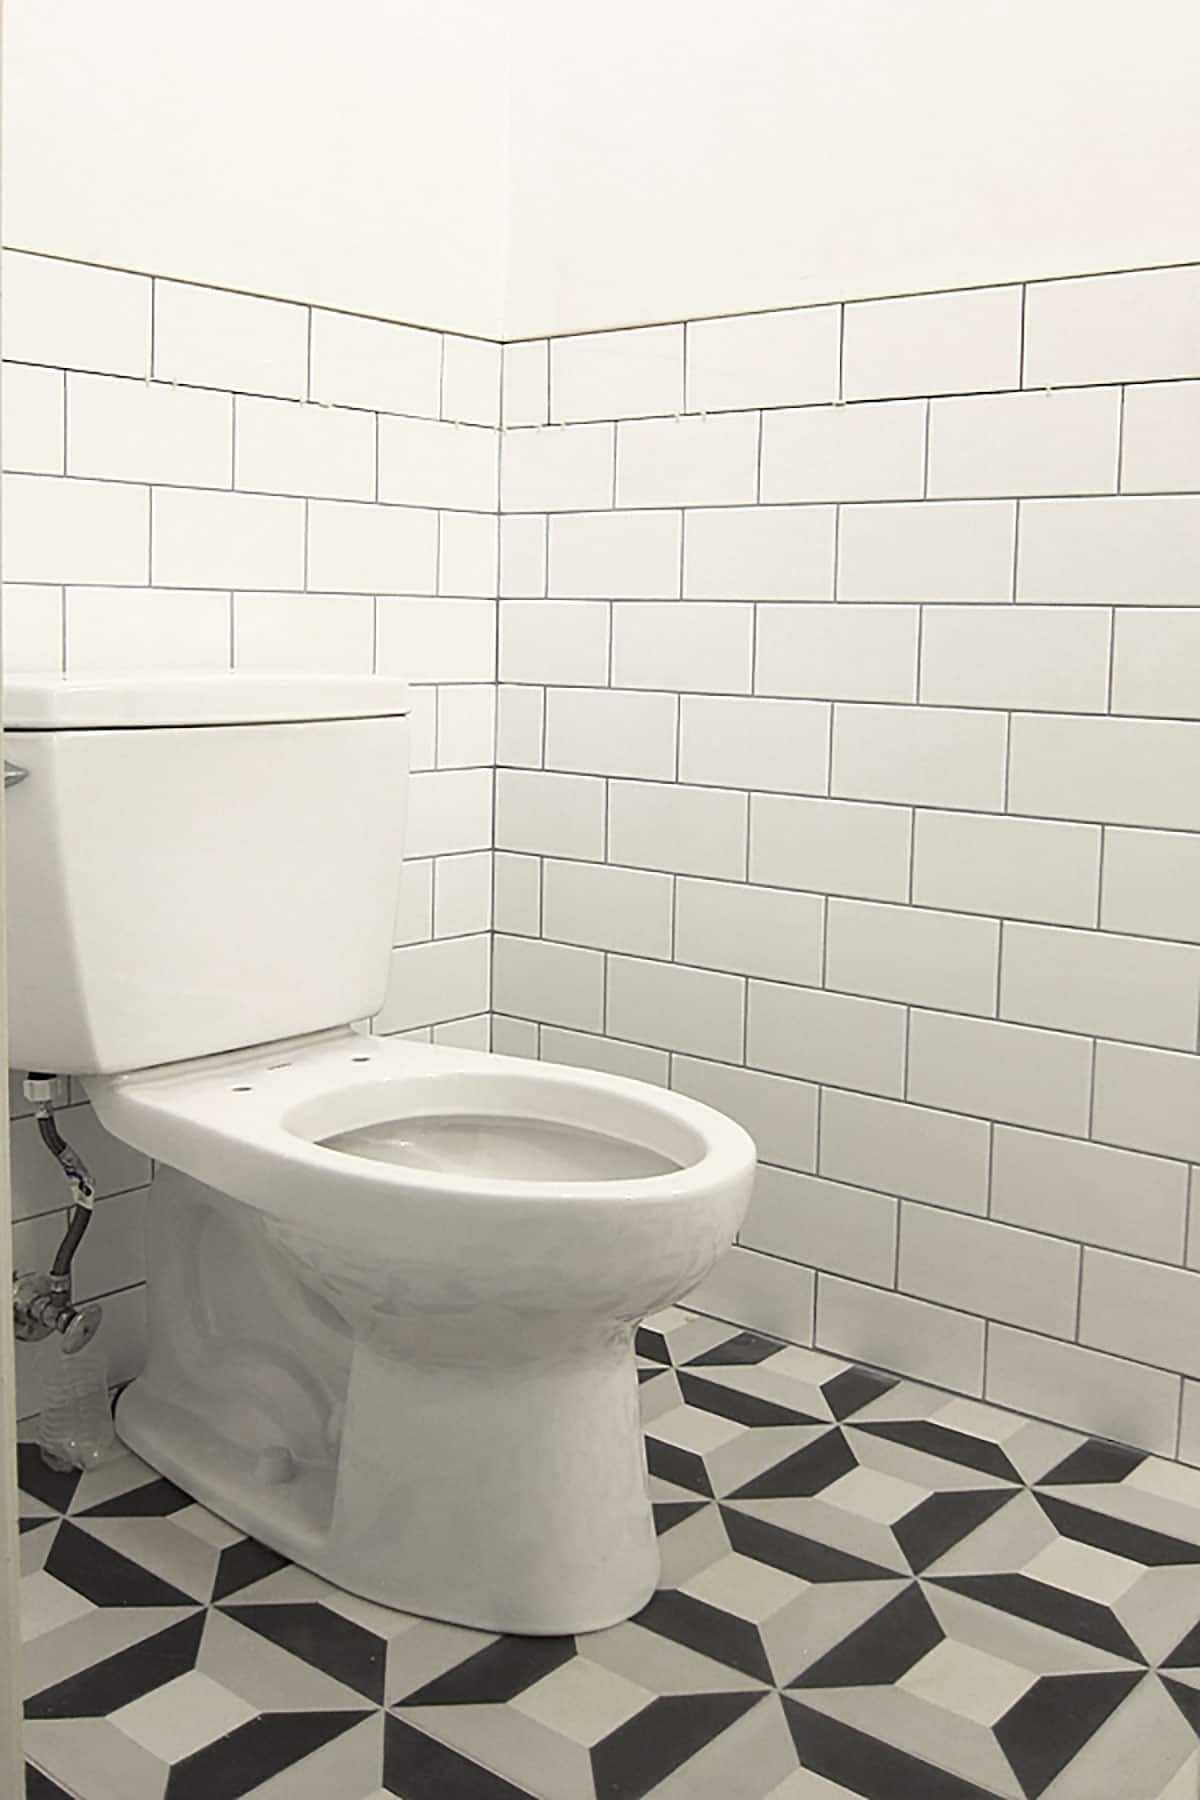 Bathroom renovation tile ideas